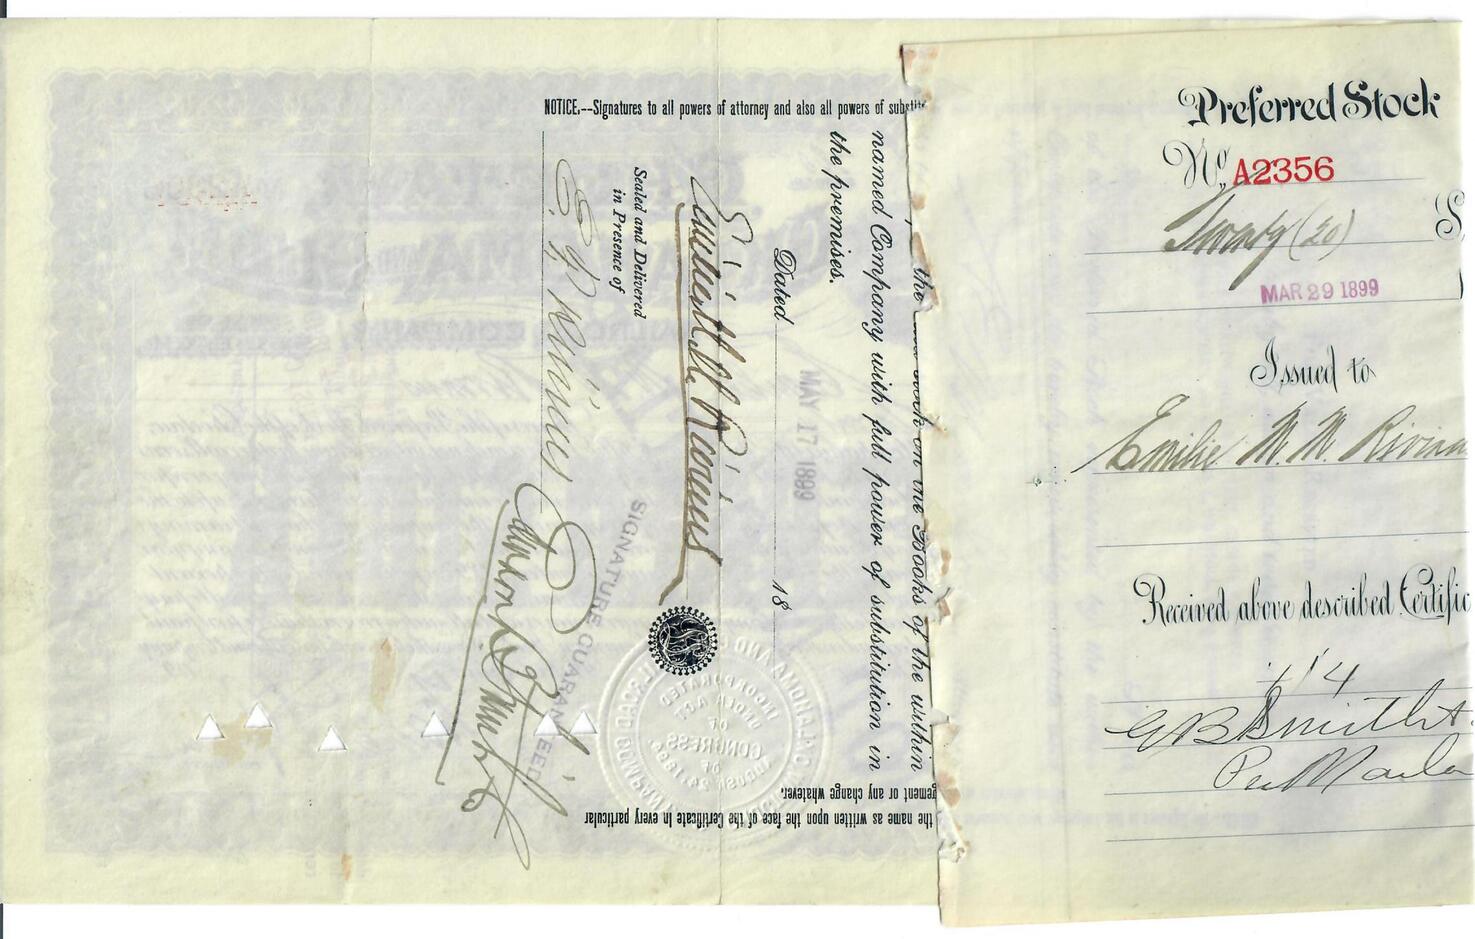 USA 20 Shares Choctaw Oklohoma and Gulf 1899, Aktie Wertpapier III | MA